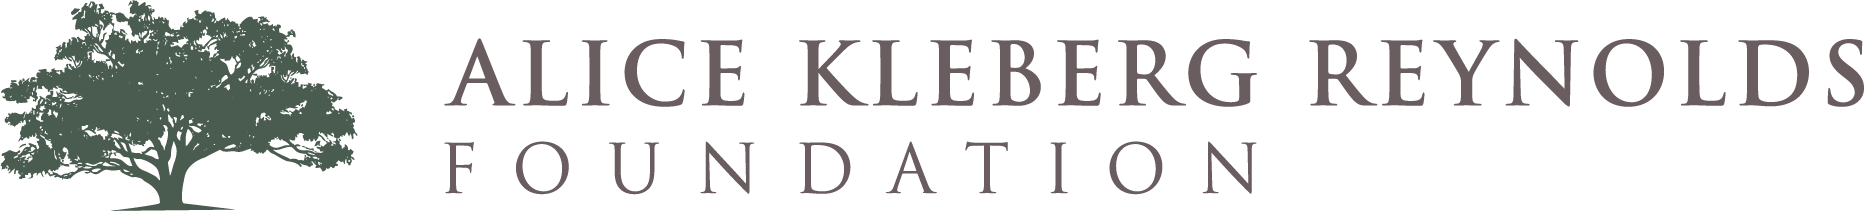 Alice-Kleberg-Reynolds-Foundation-logo.png